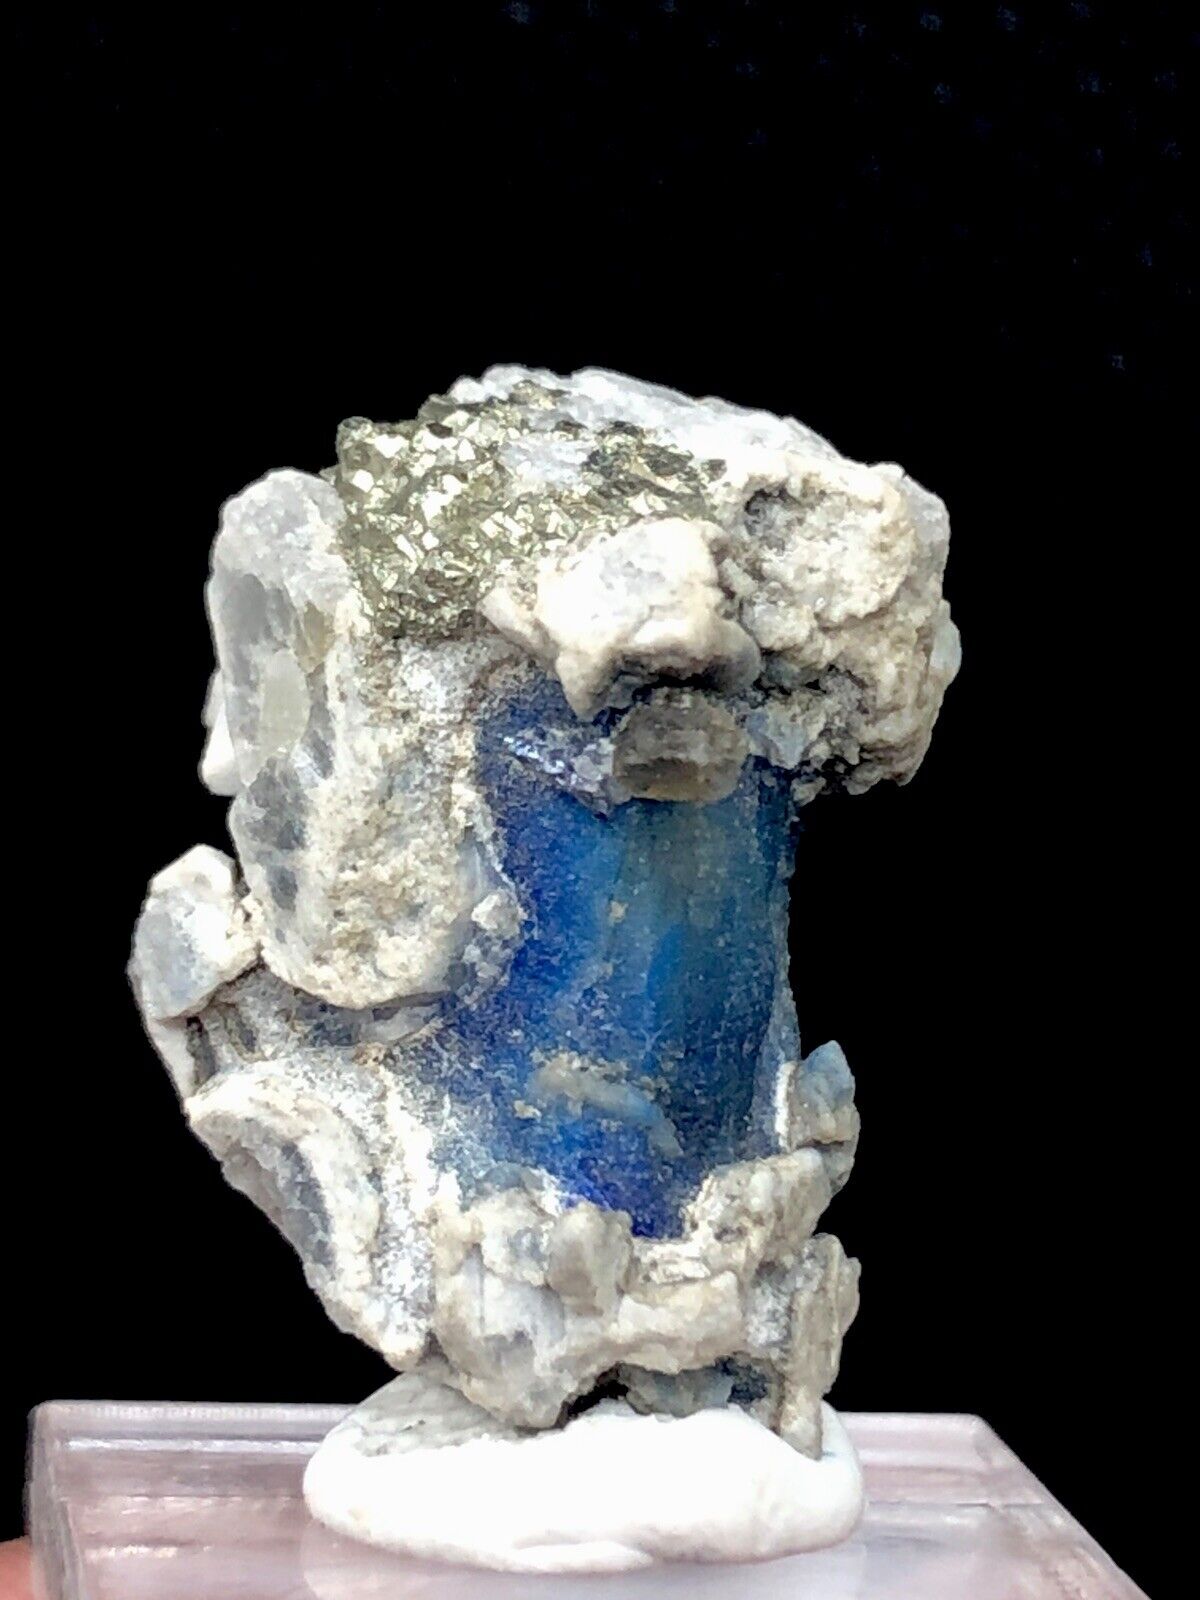 Beautiful Lazurite Crystal Small Specimen From Badakshan Afghanistan